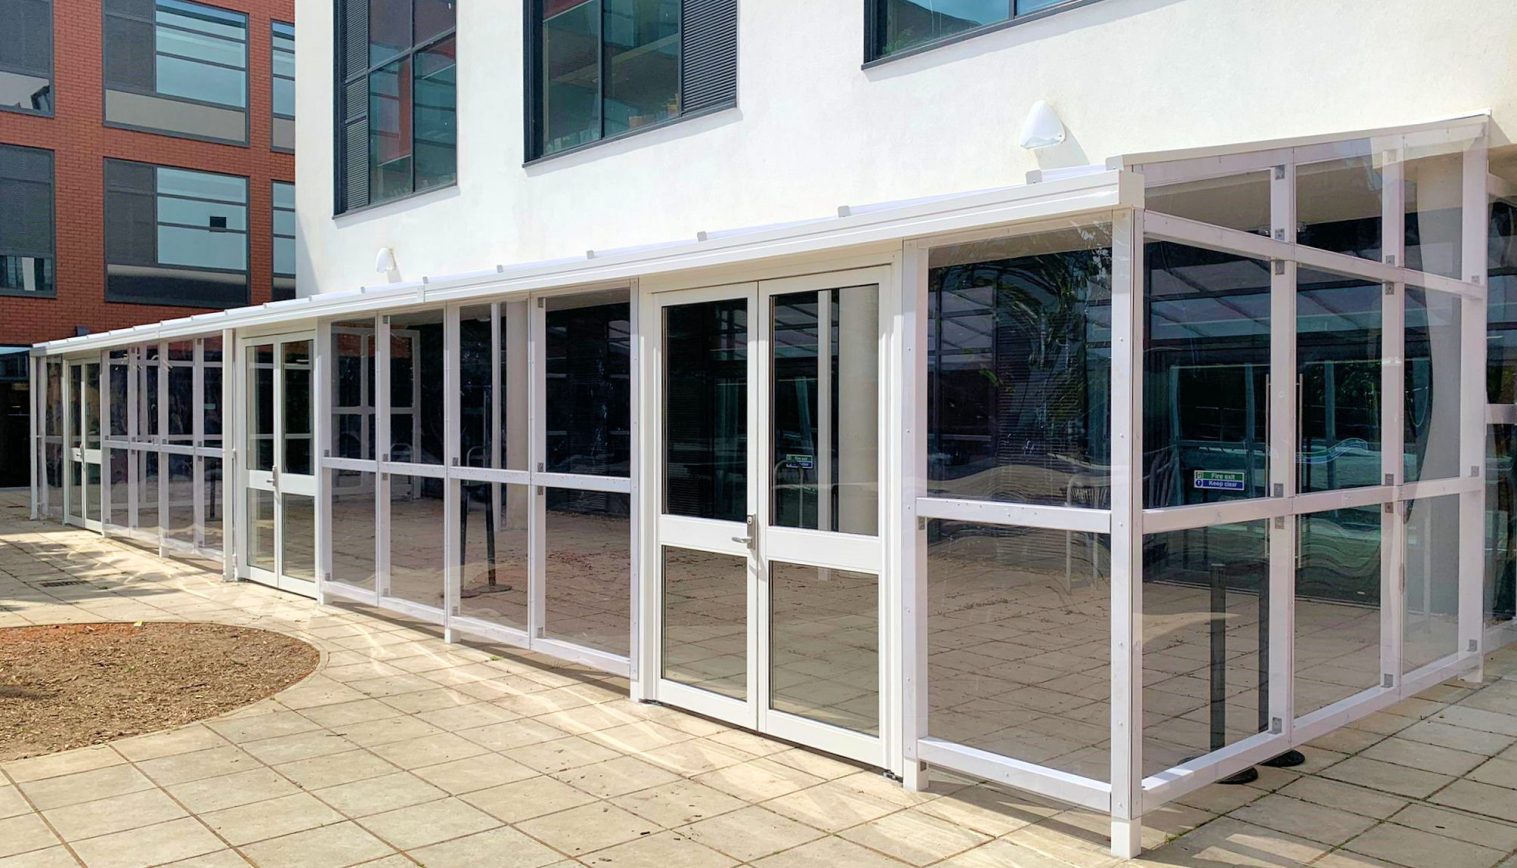 Weald of Kent Grammar School – Modular Outdoor Classroom